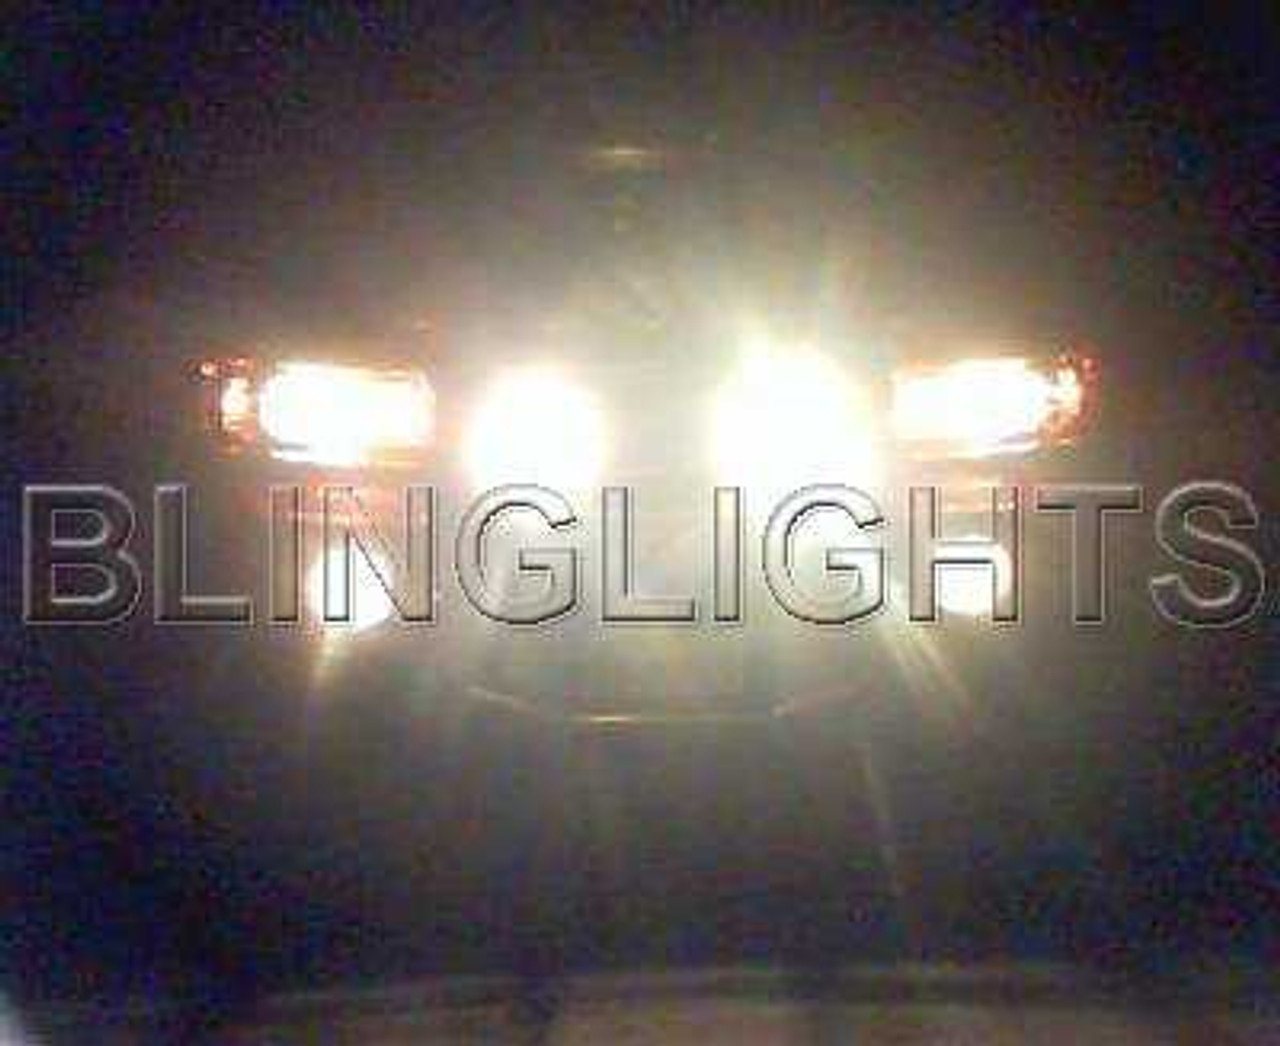 Lincoln Aviator Bar Off Road Bar Lamps Driving Lights Kit